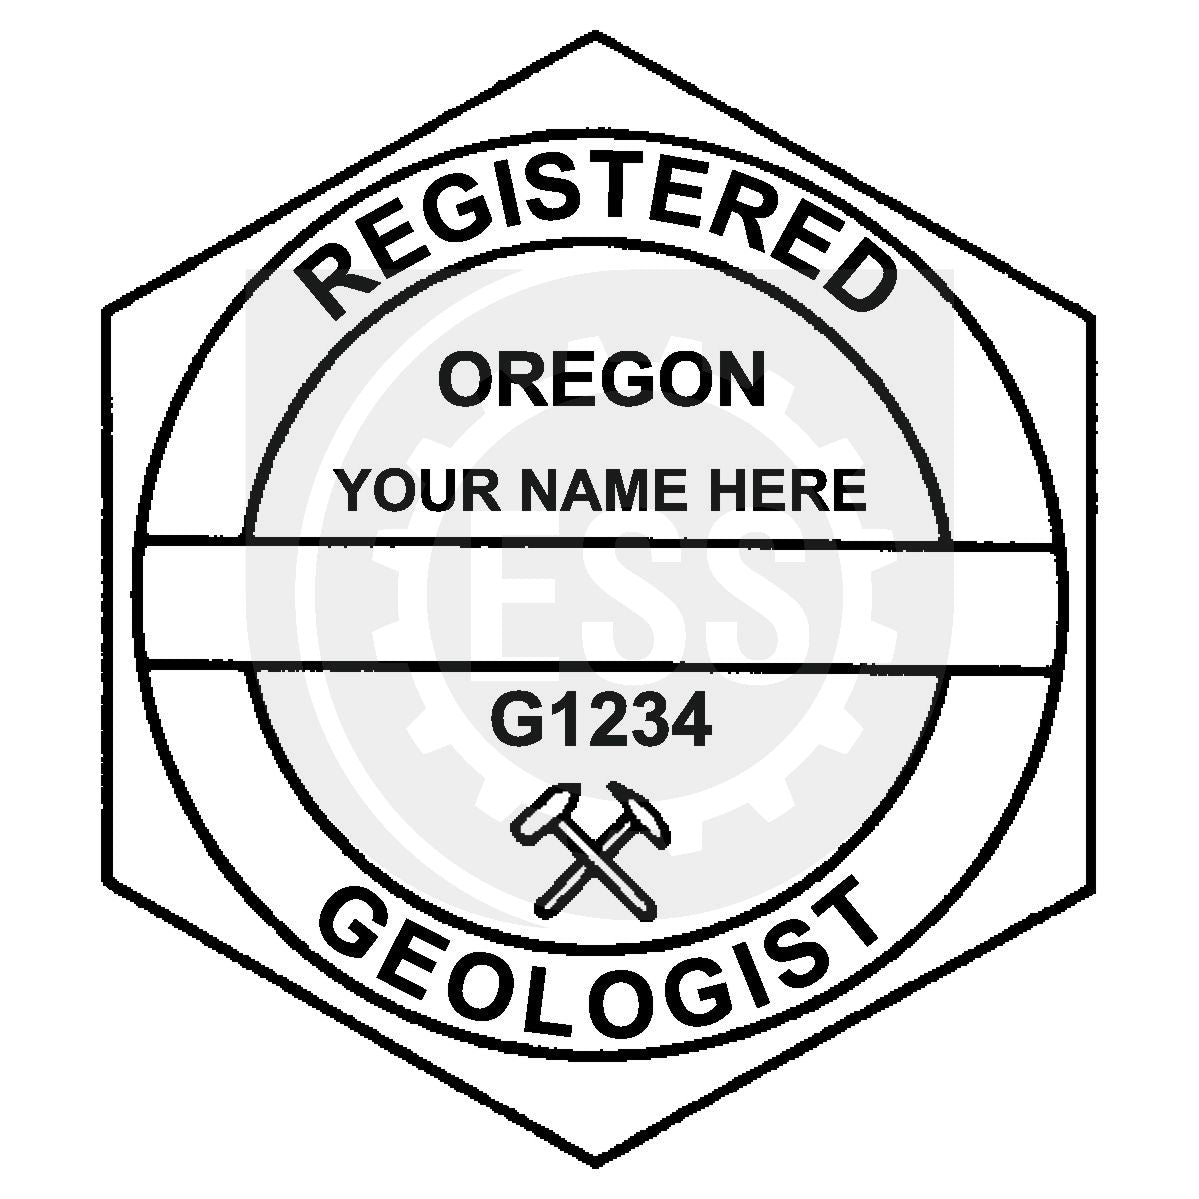 Oregon Geologist Seal Setup